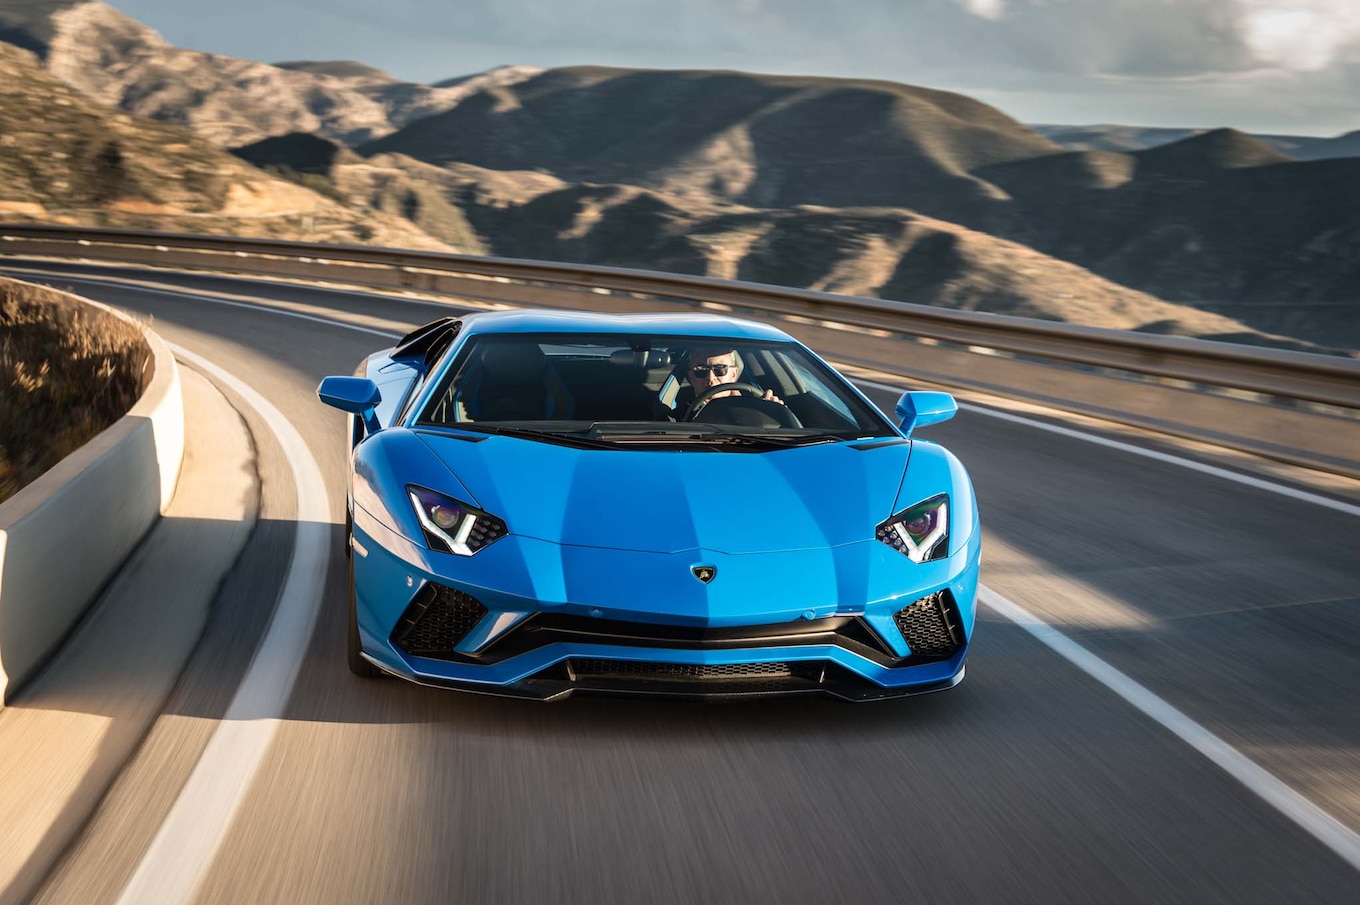 2018-Lamborghini-Aventador-S-front-end-in-motion-turn.jpg